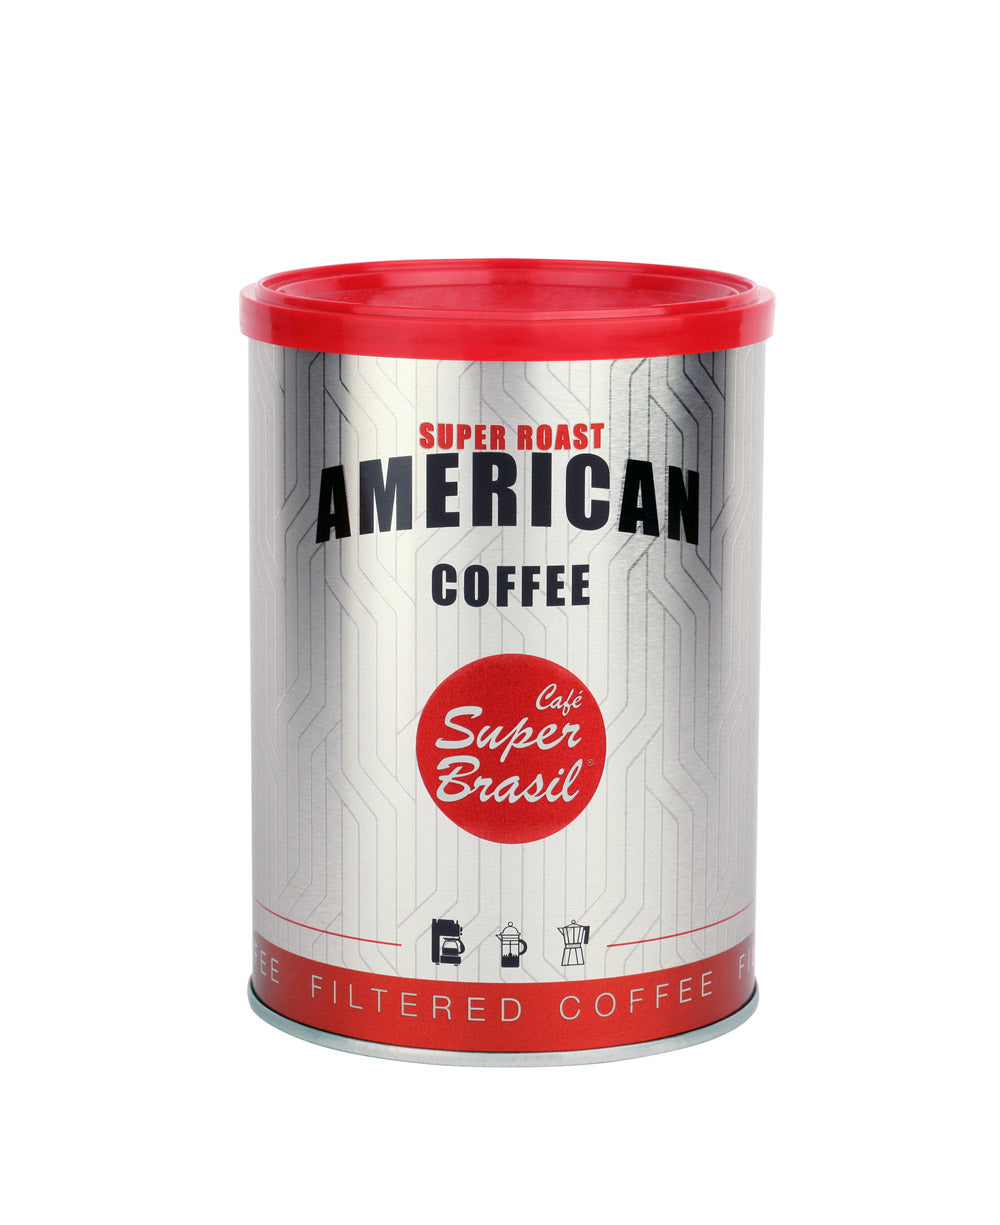 Café Super Brasil Filtered American Coffee